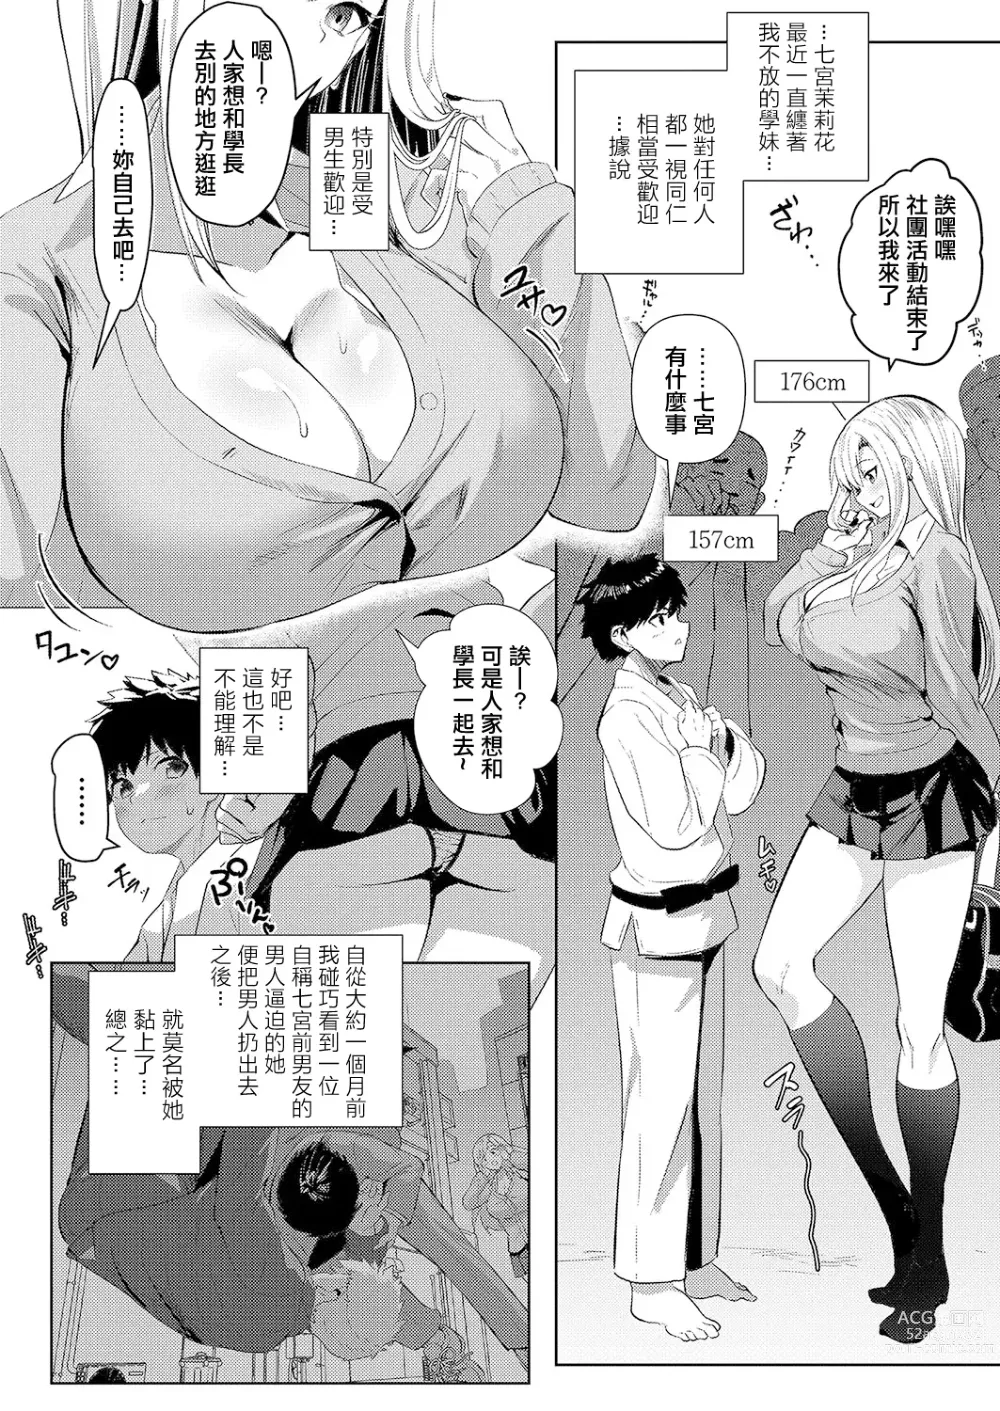 Page 2 of manga Gal no Me ni sae Koikaze Tamaru